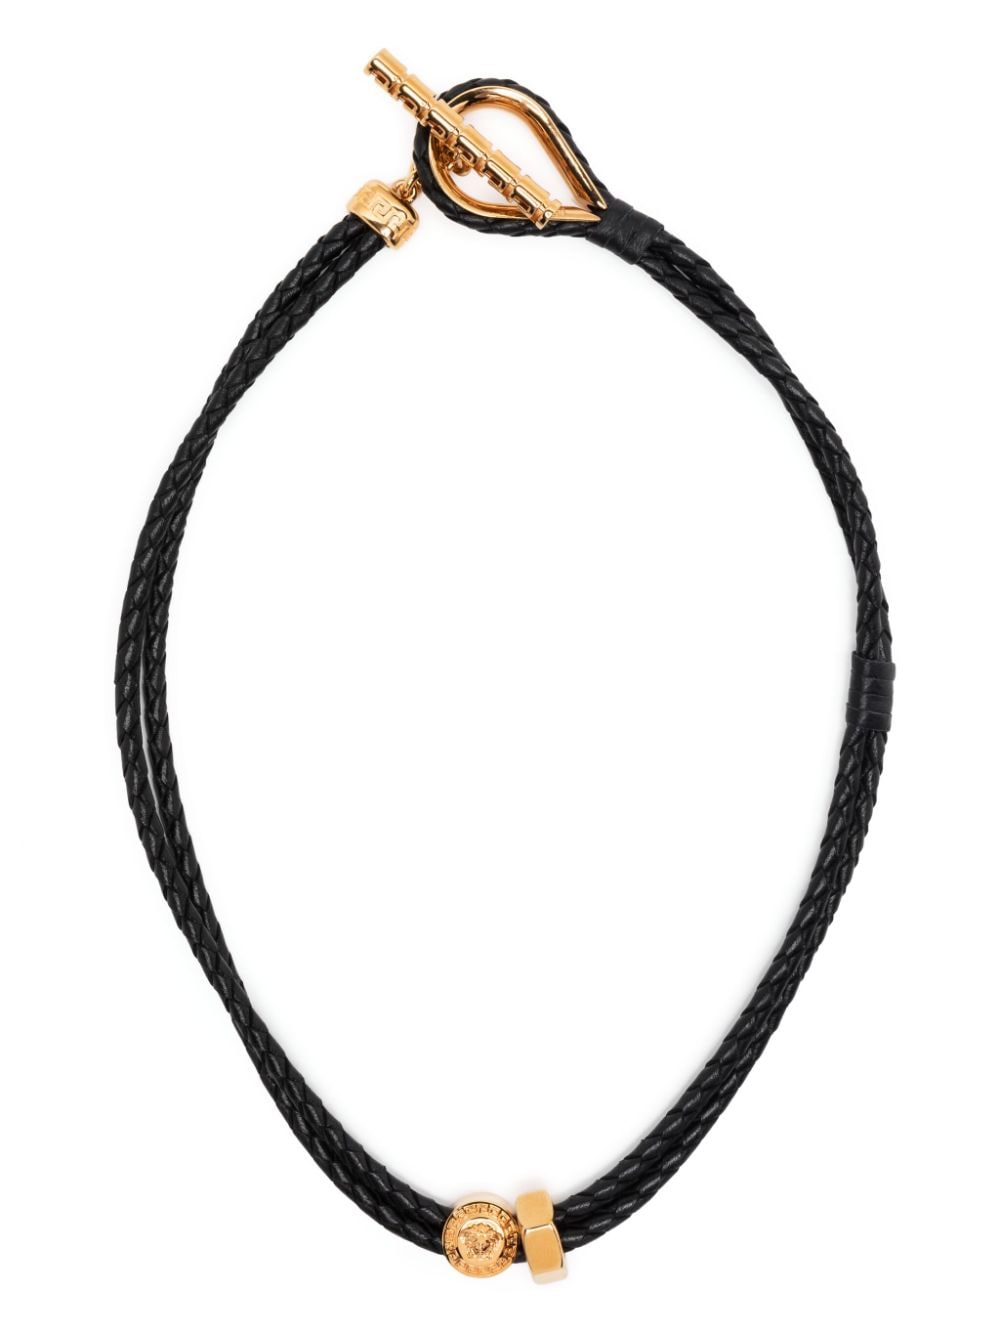 Greca braided leather necklace